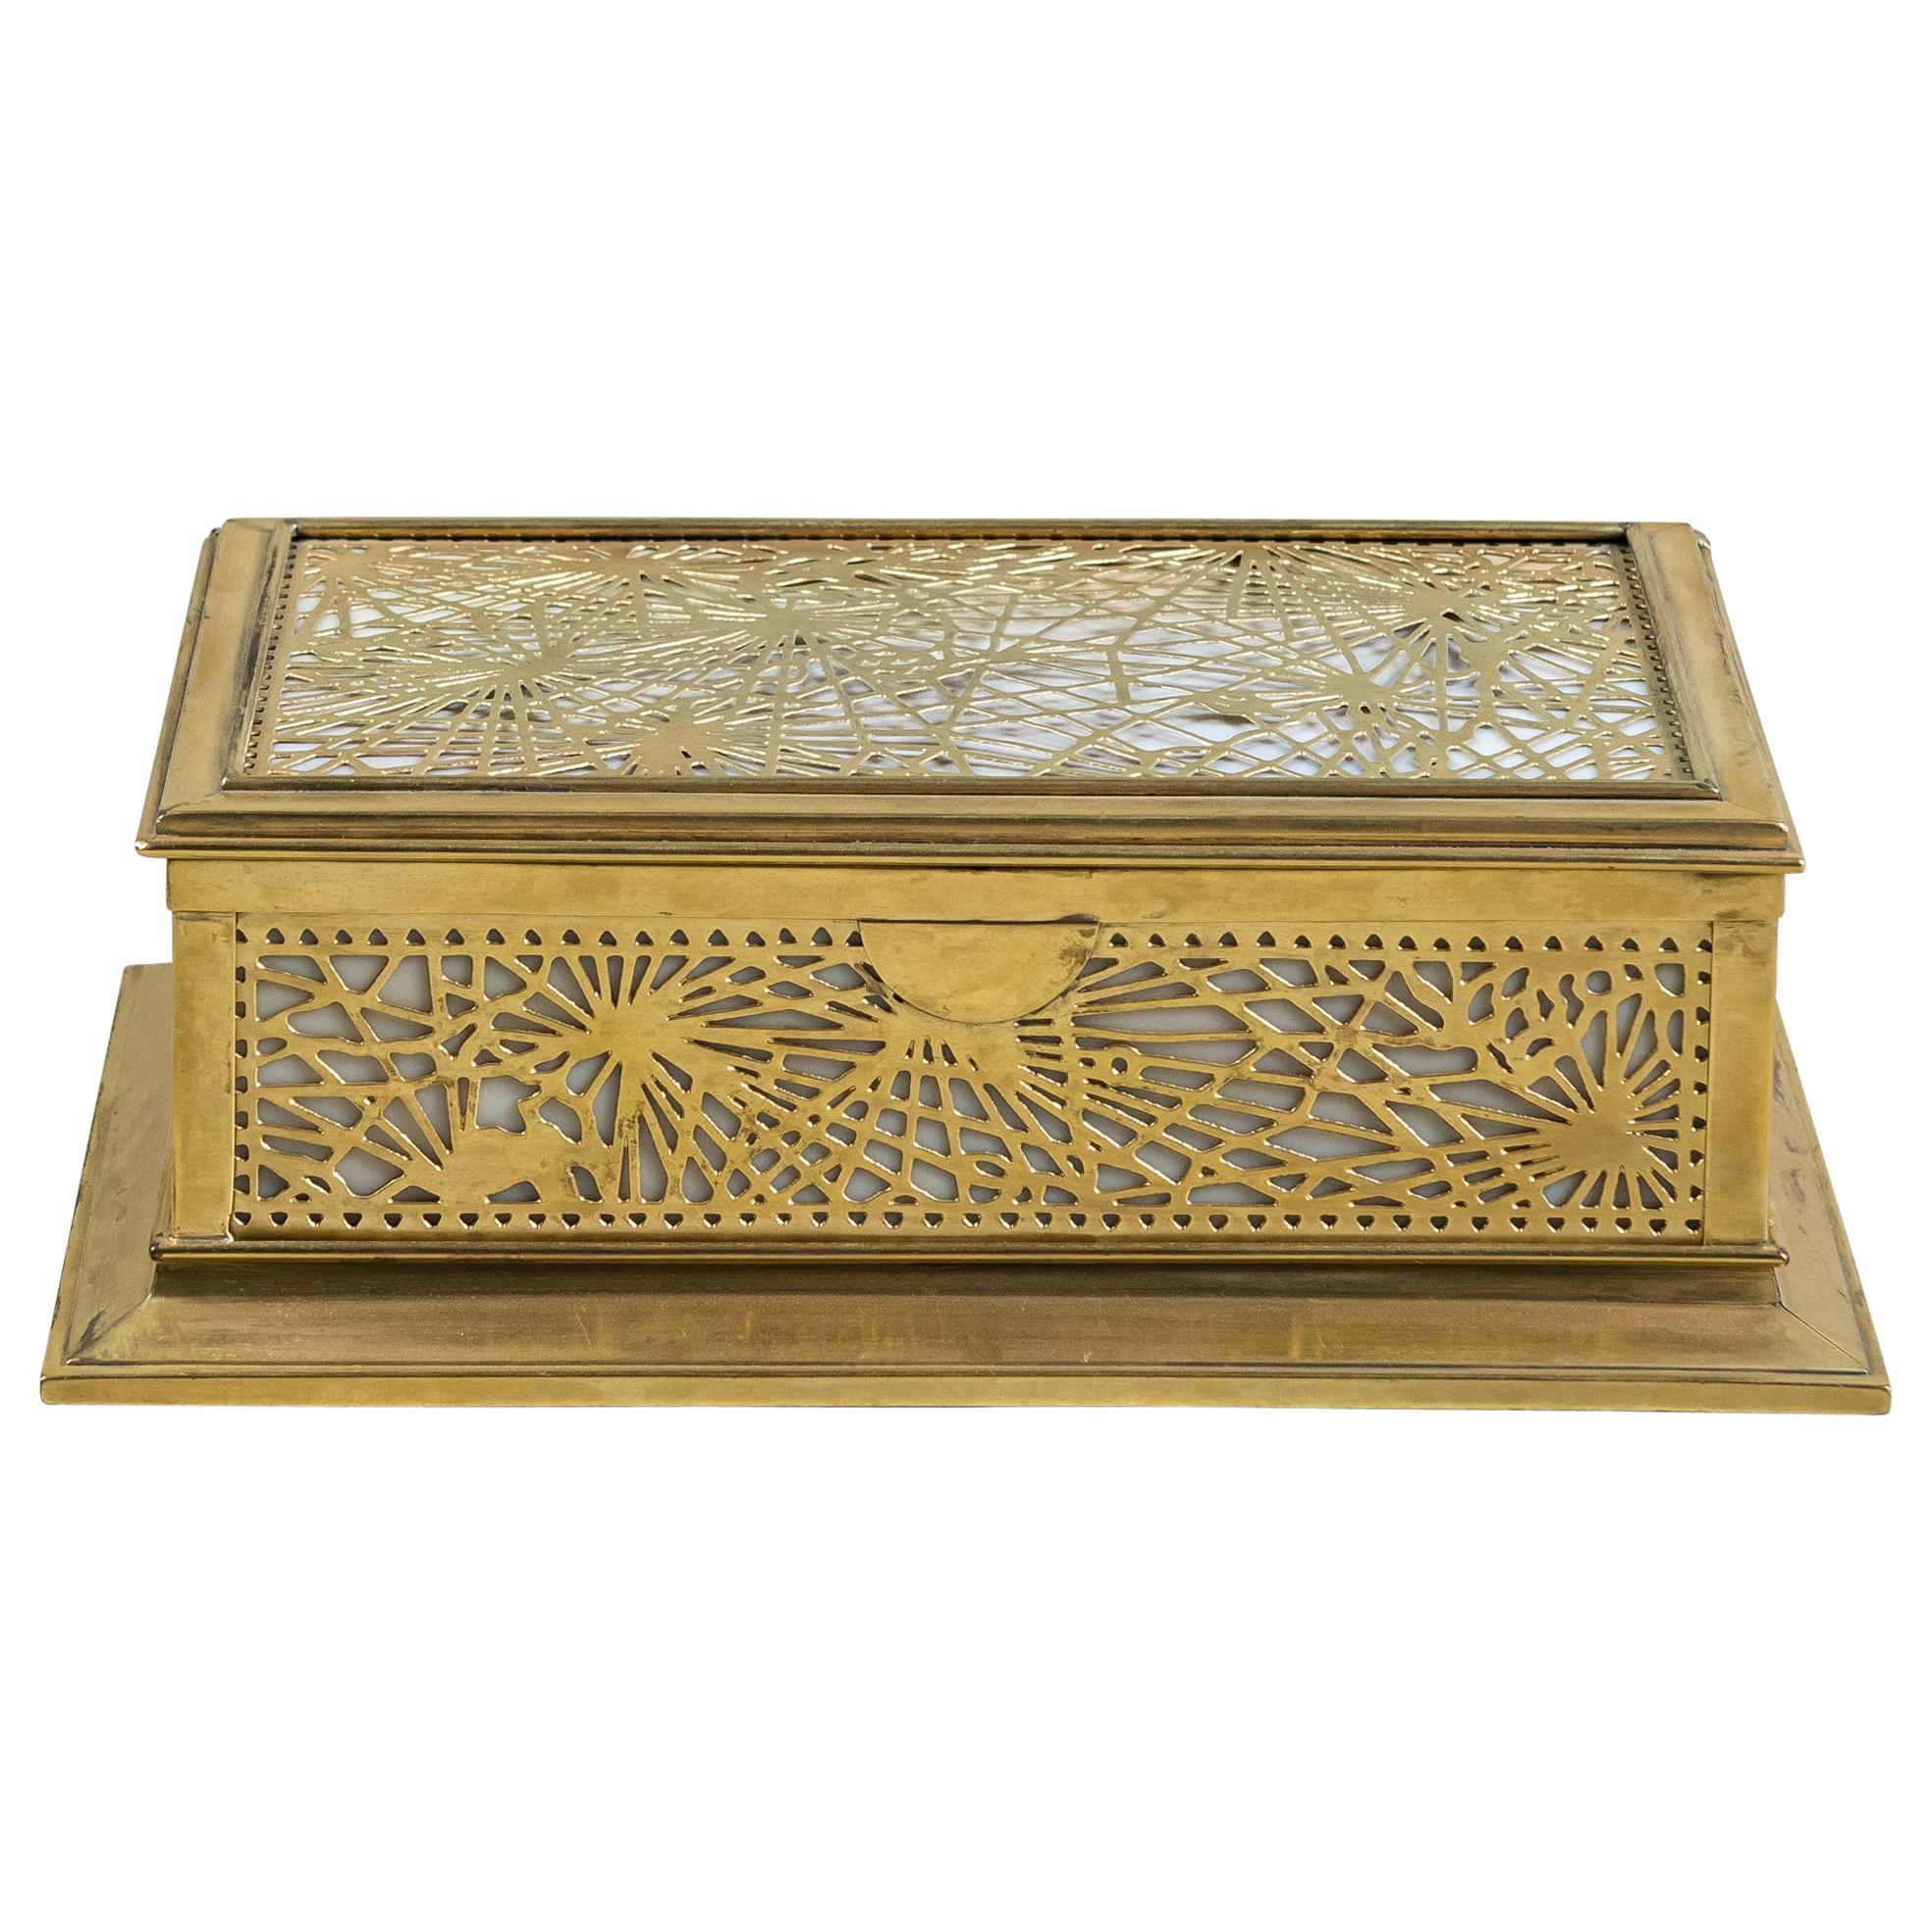 Bronze and Slag Glass Tiffany Jewelry Box, Art Deco Period, United States